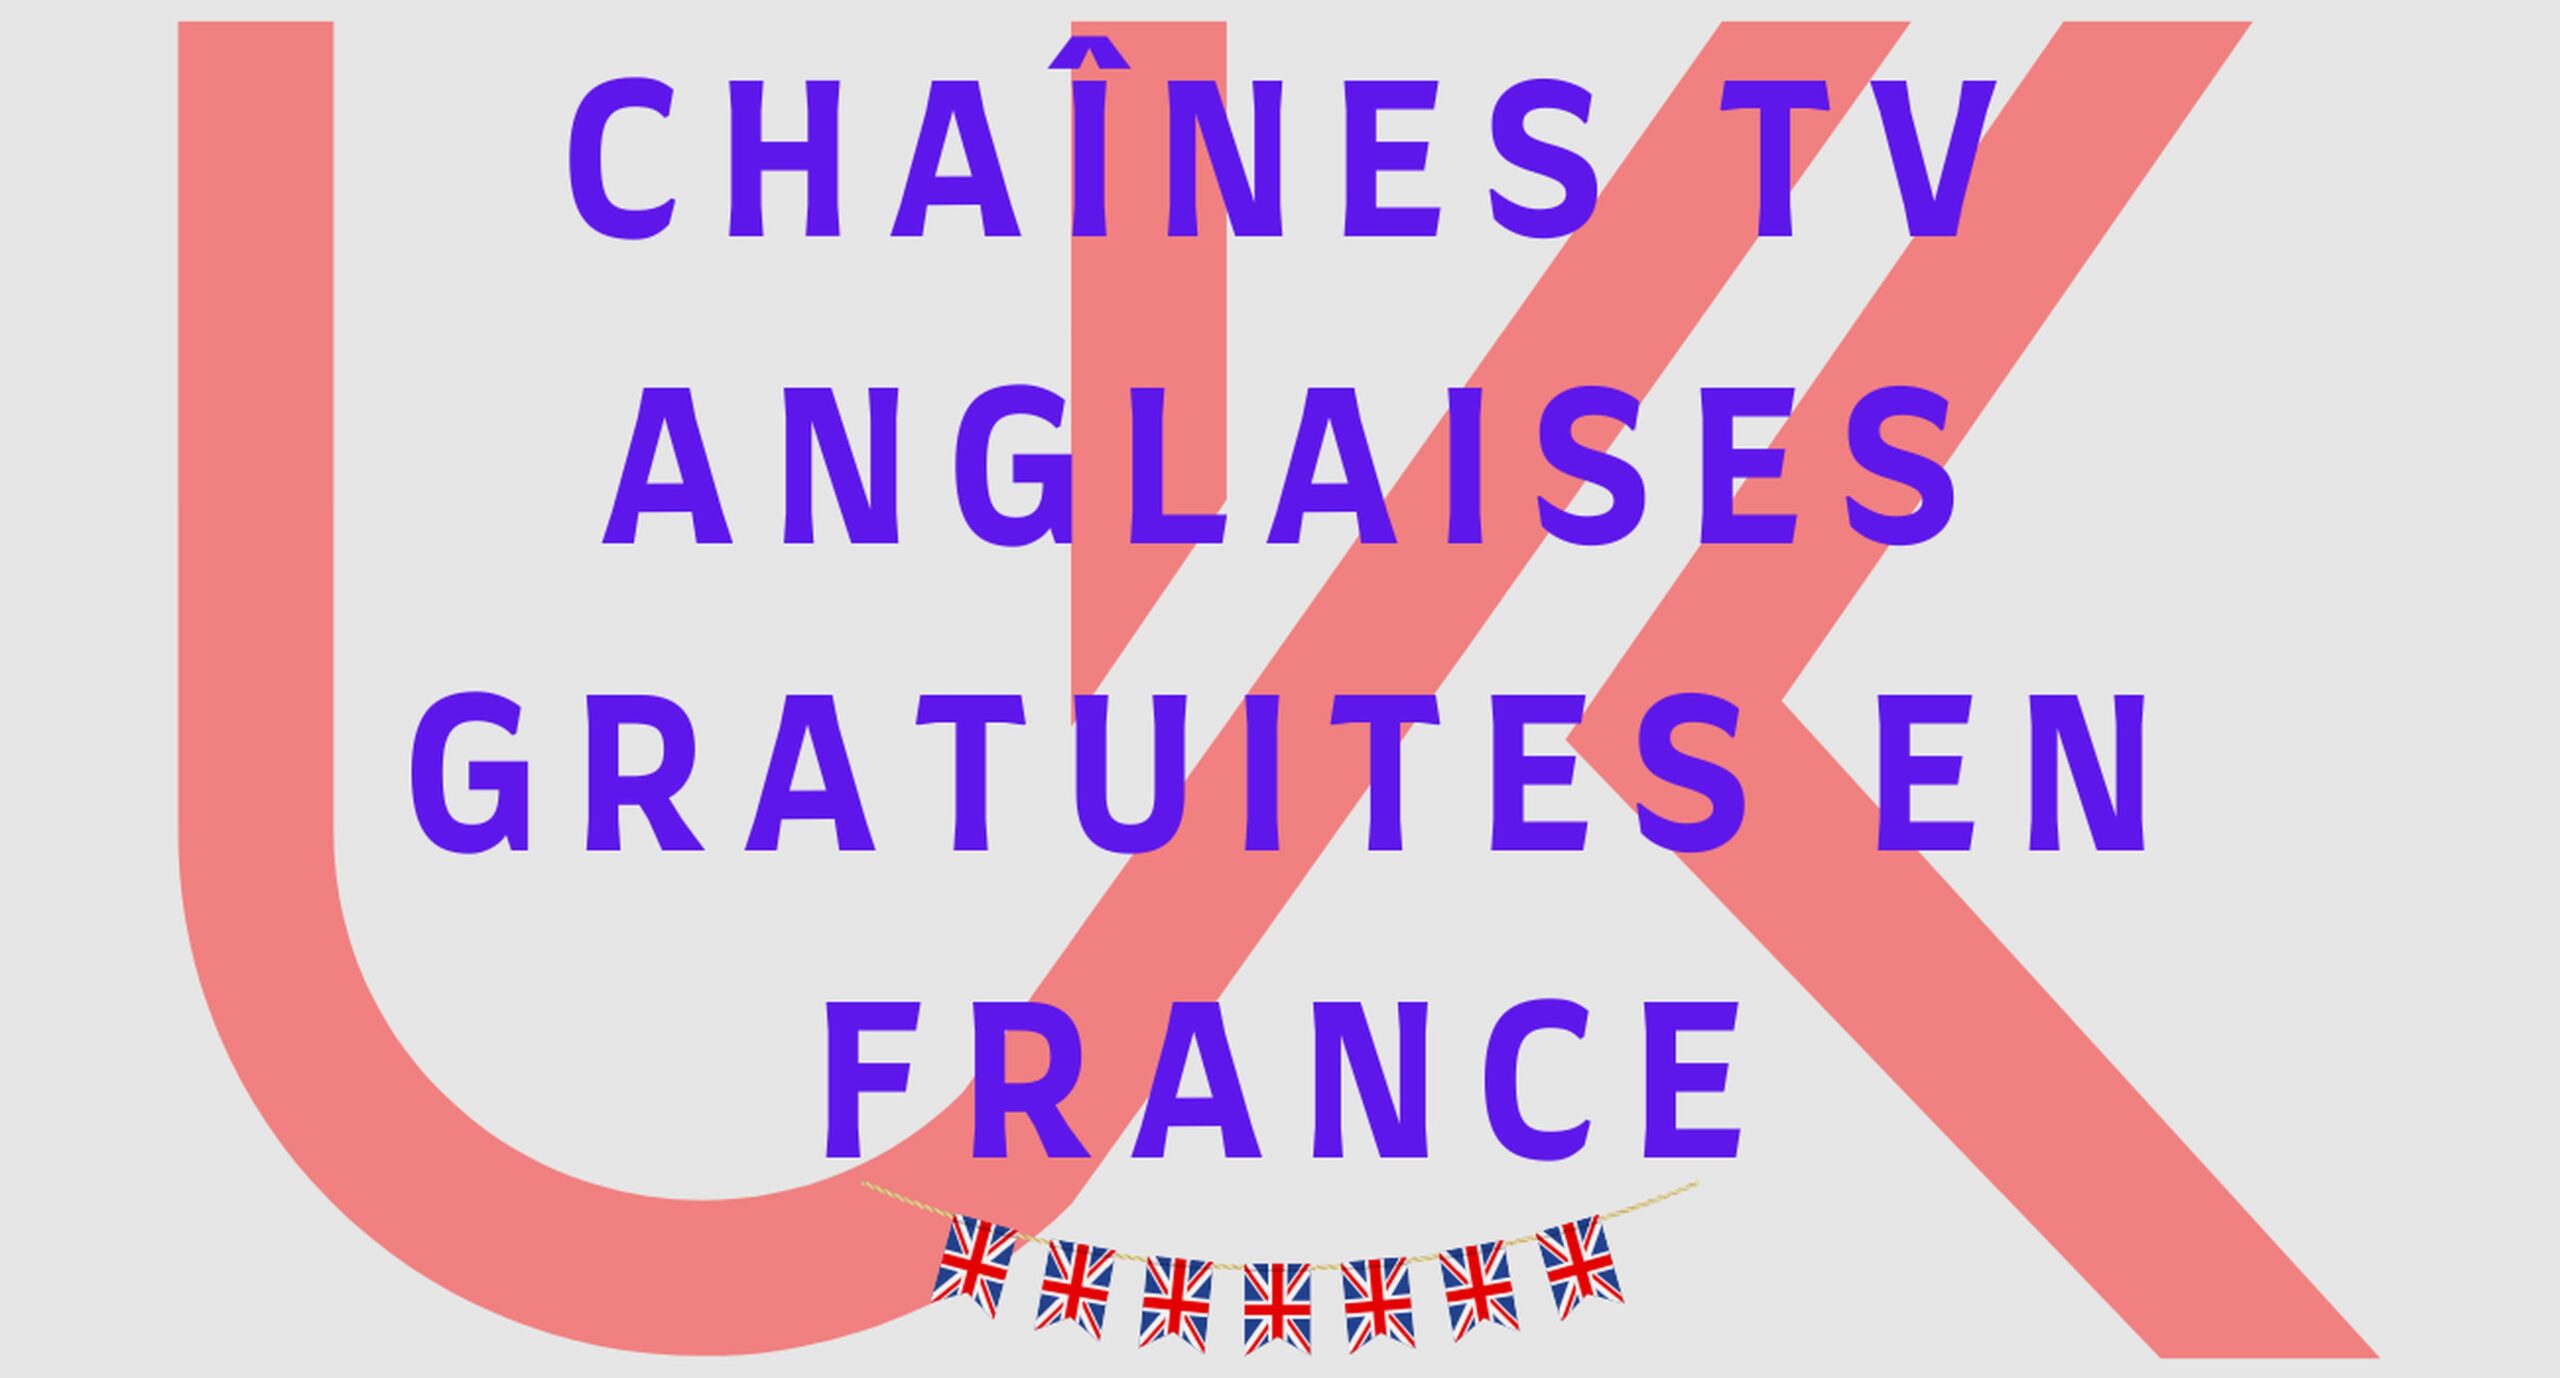 Chaînes TV Anglaises gratuites en France - 55 Chaînes TV disponibles 15